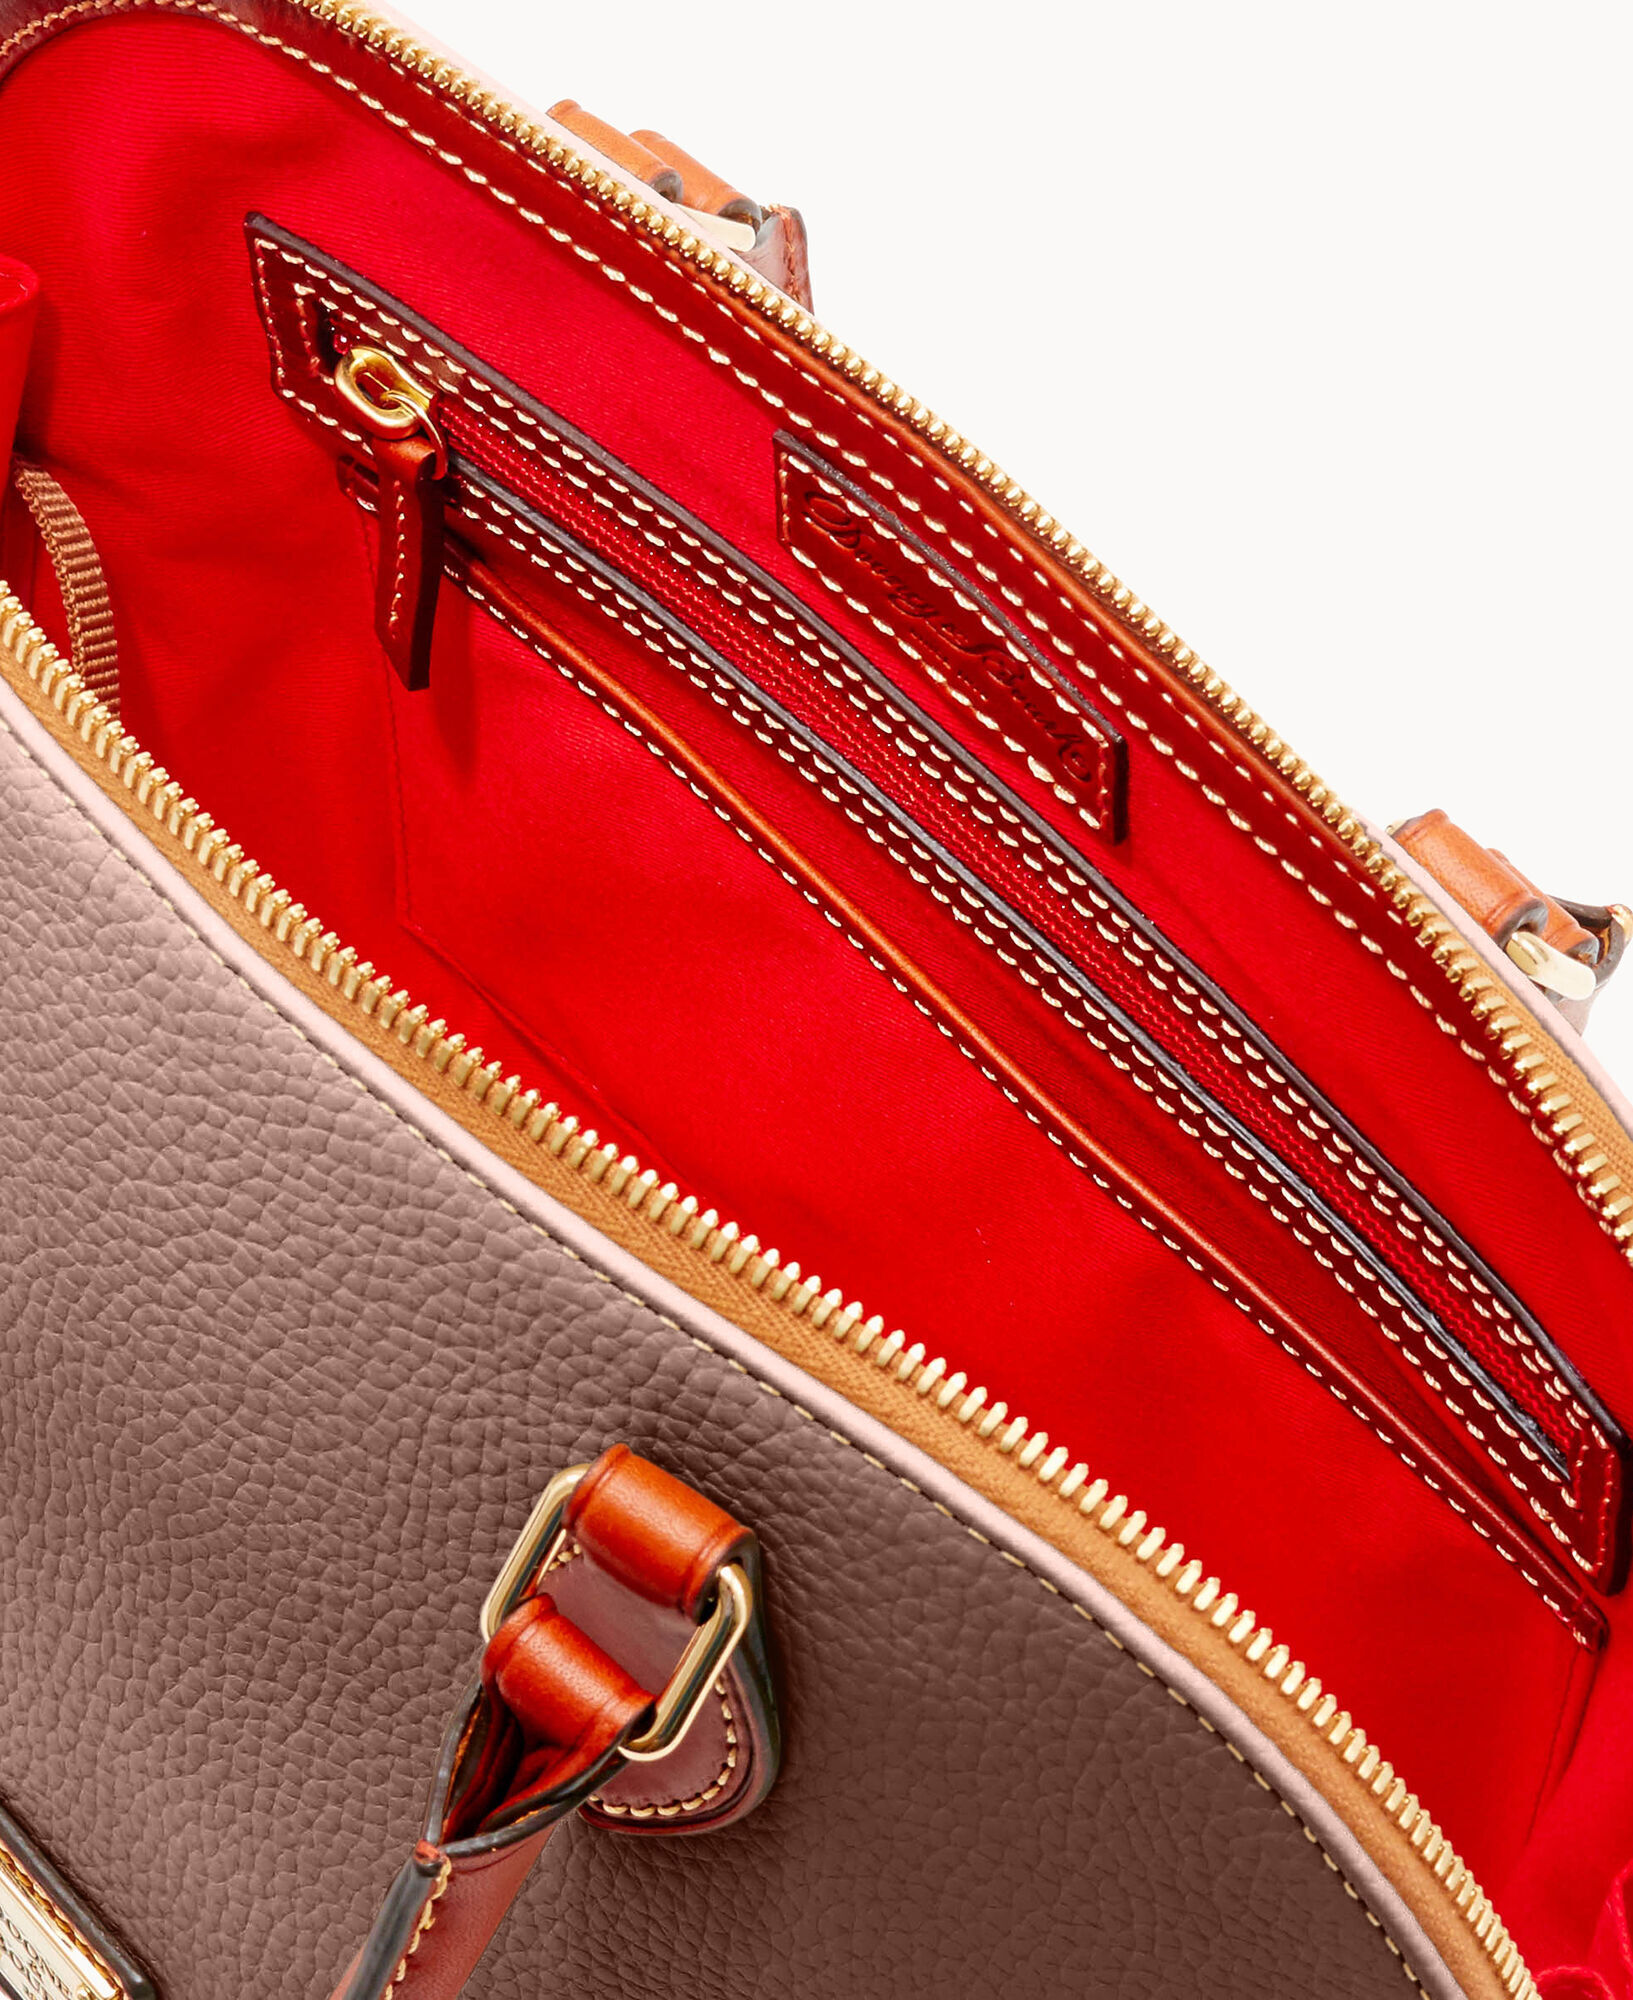 Salt Strap Review: We tried the crossbody purse strap